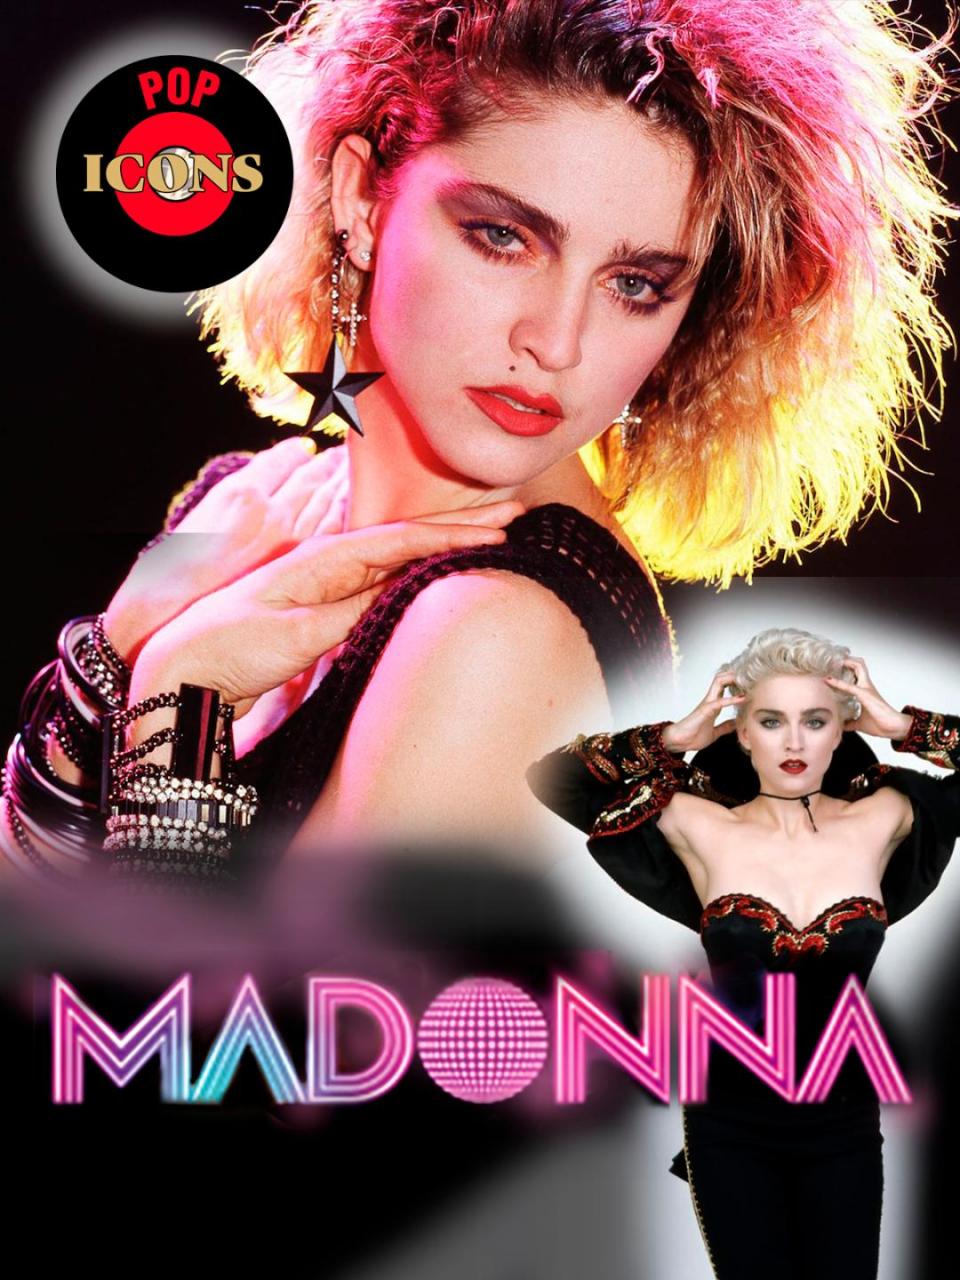 Pop Icons: Madonna